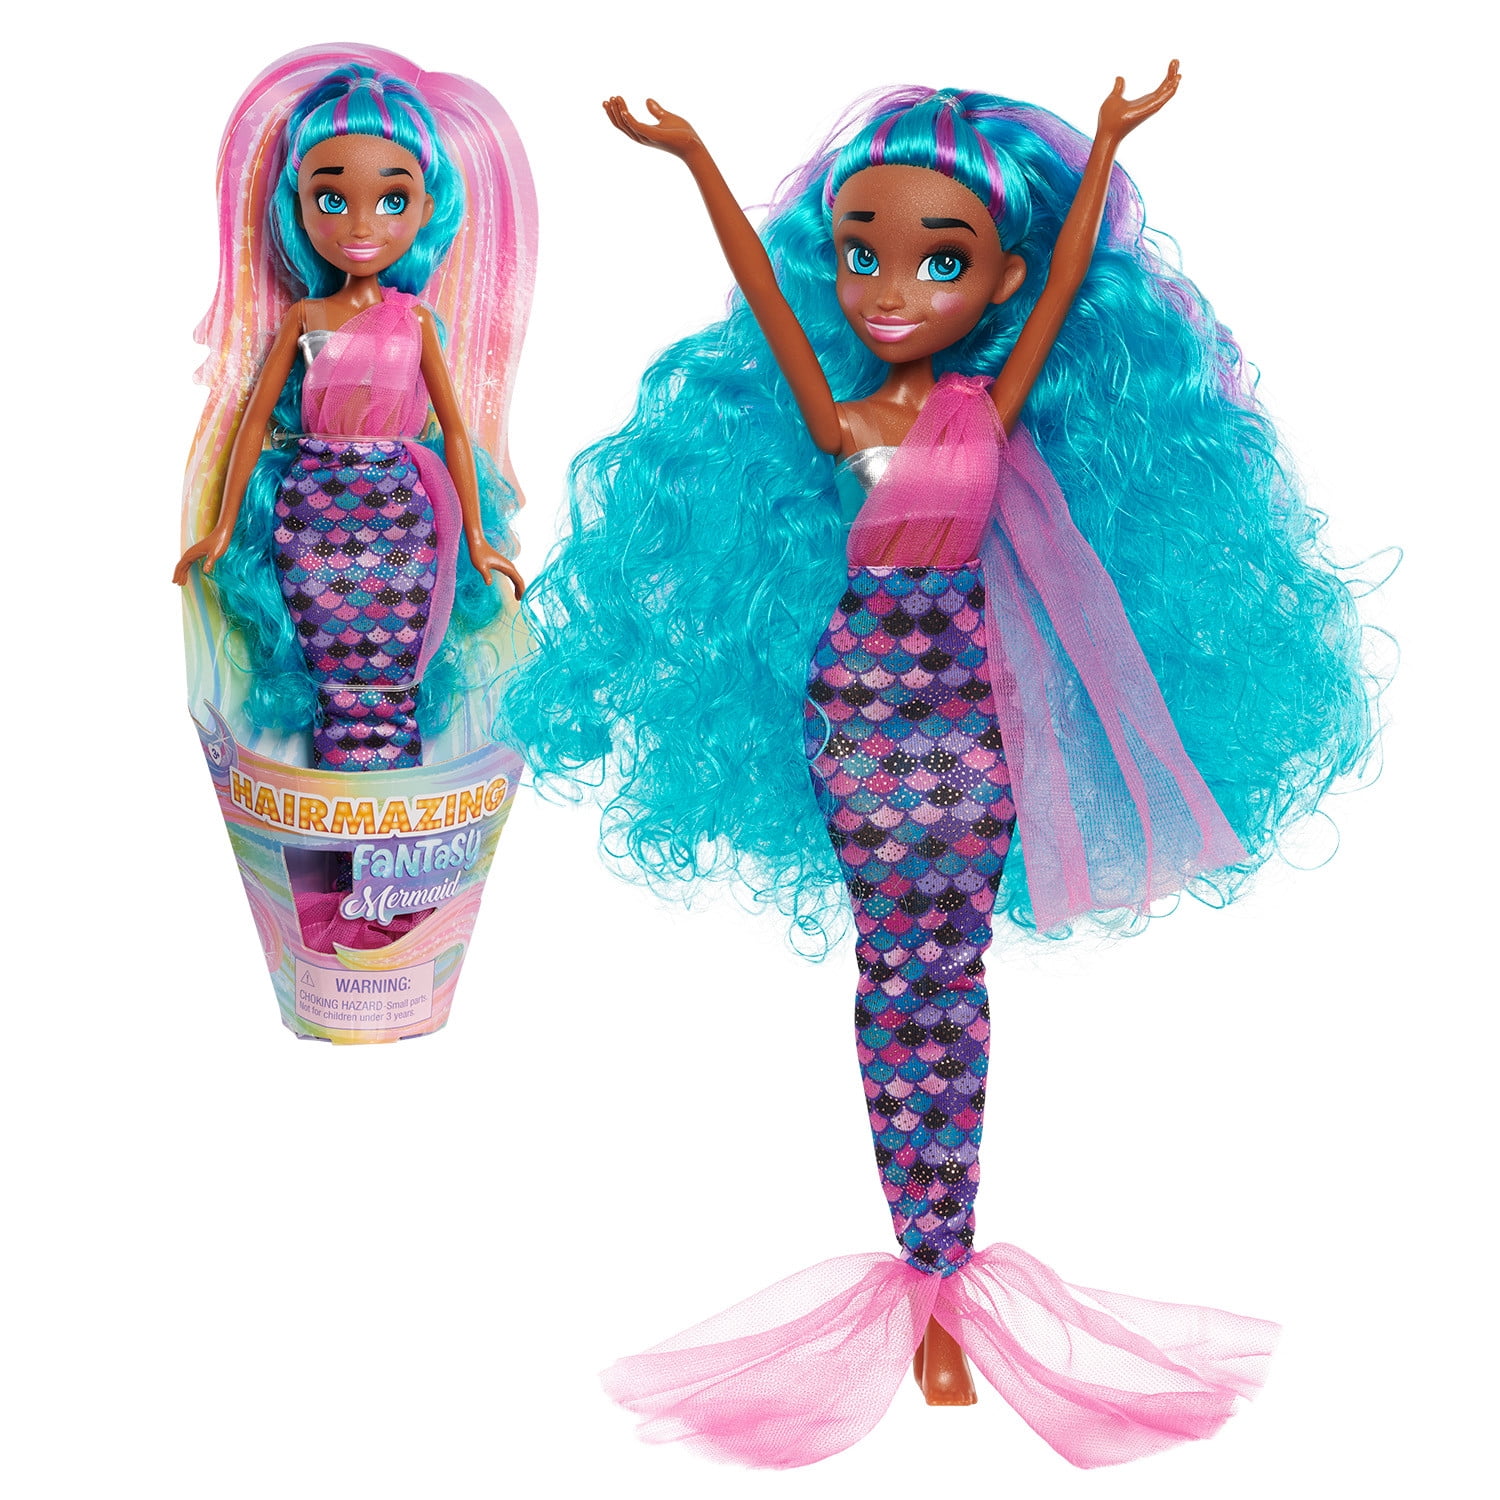 Hairmazing Fantasy Fashion Mermaid Doll & Accessories, Kids Toys for ...